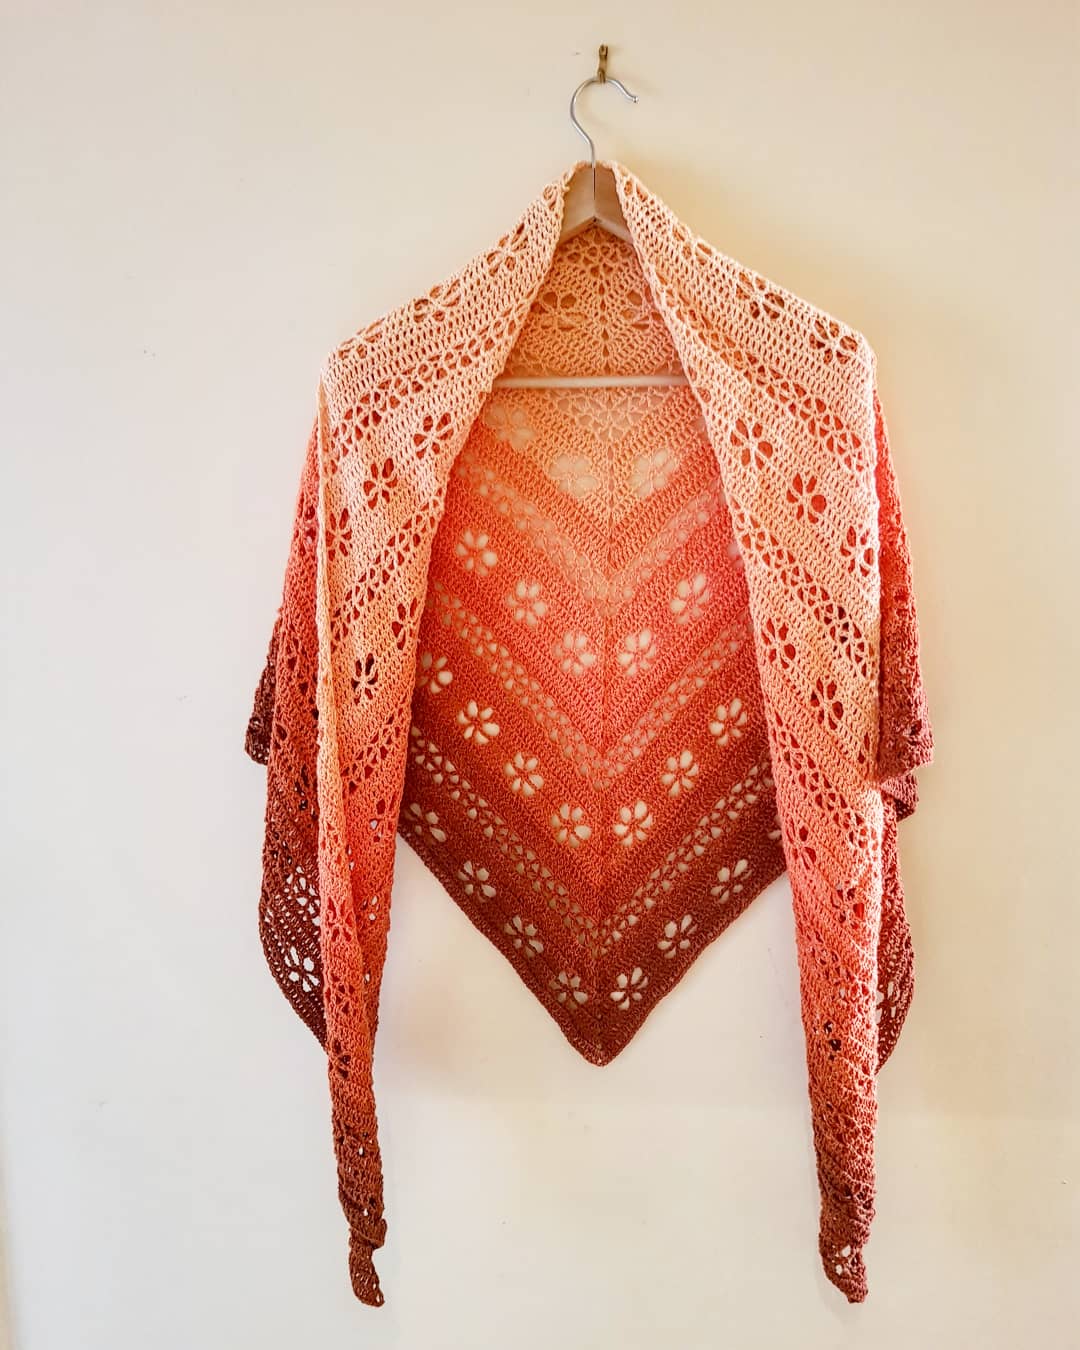 Crochet tiangel shawl using scheepjes whirl